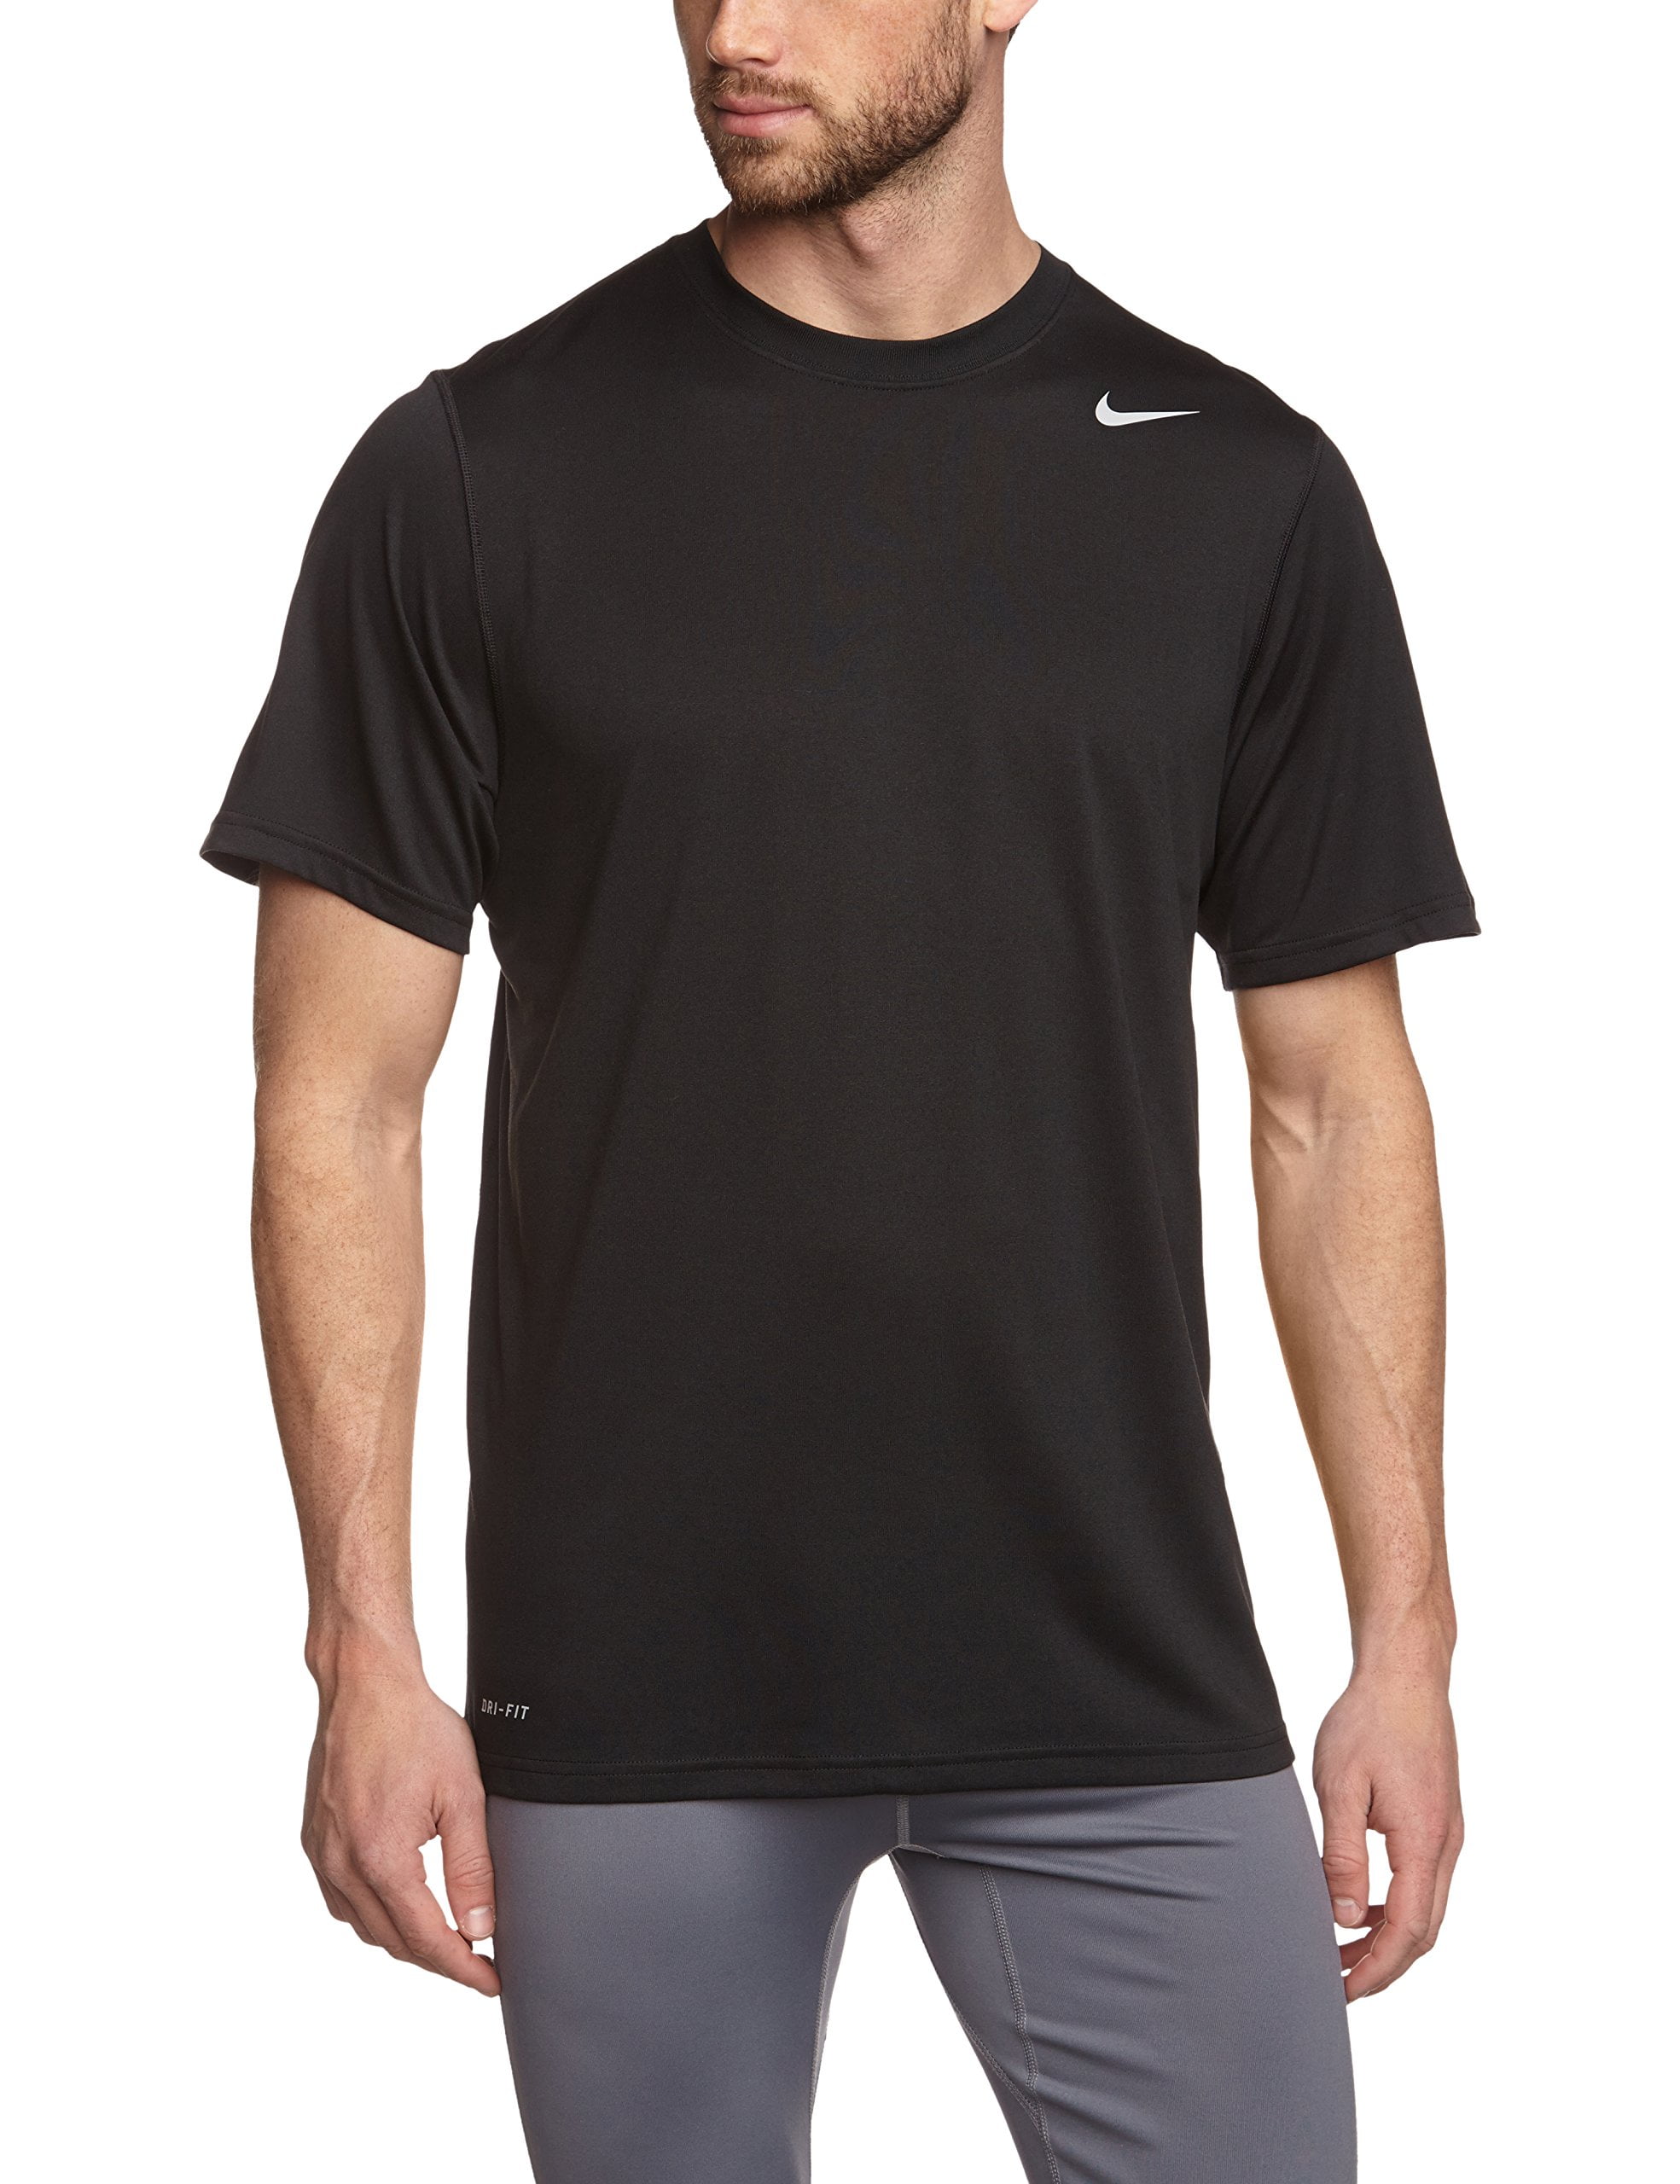 Nike NEW Black Mens Size Small S Logo Print Short Sleeve Athletic Shirt ...